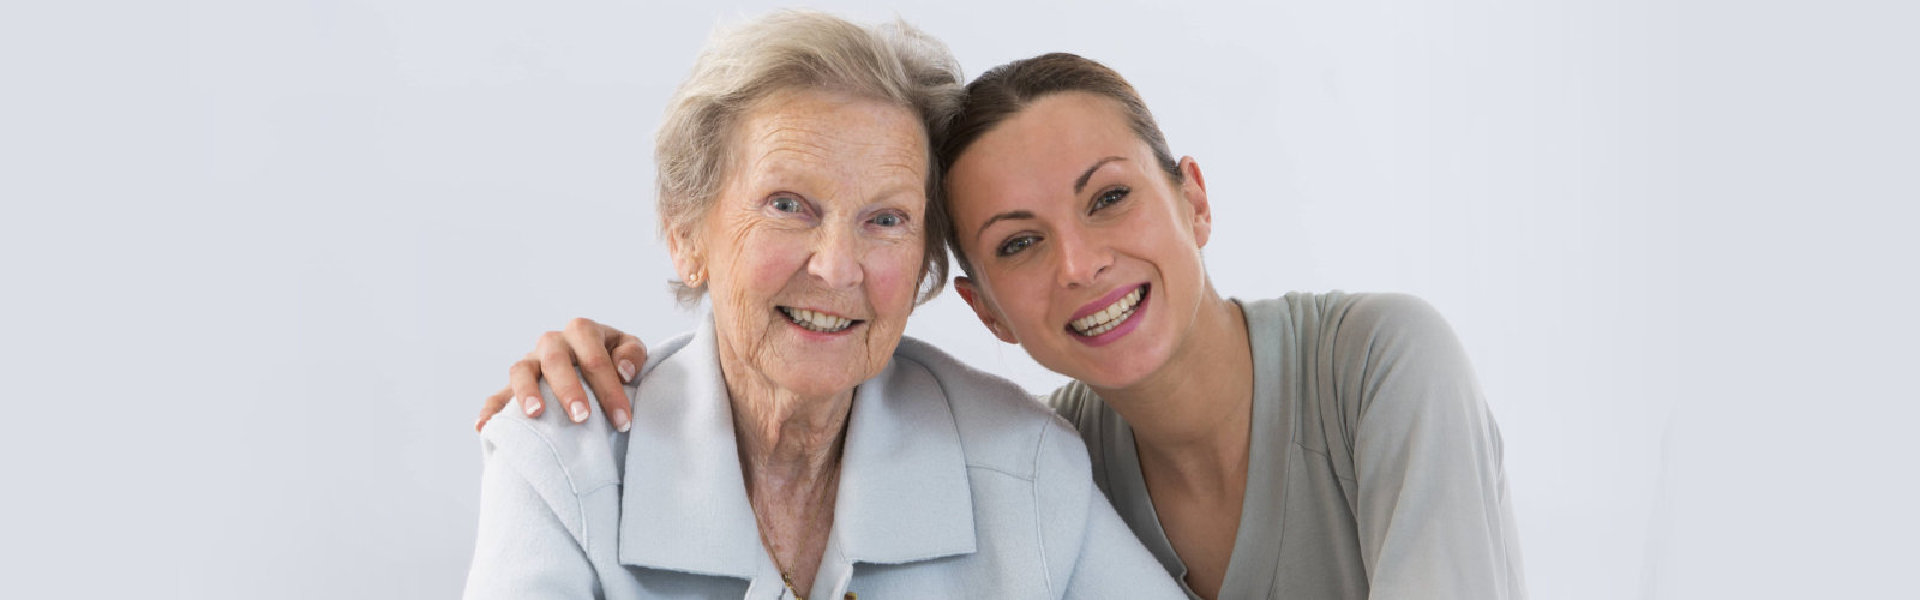 elder woman with caregiver